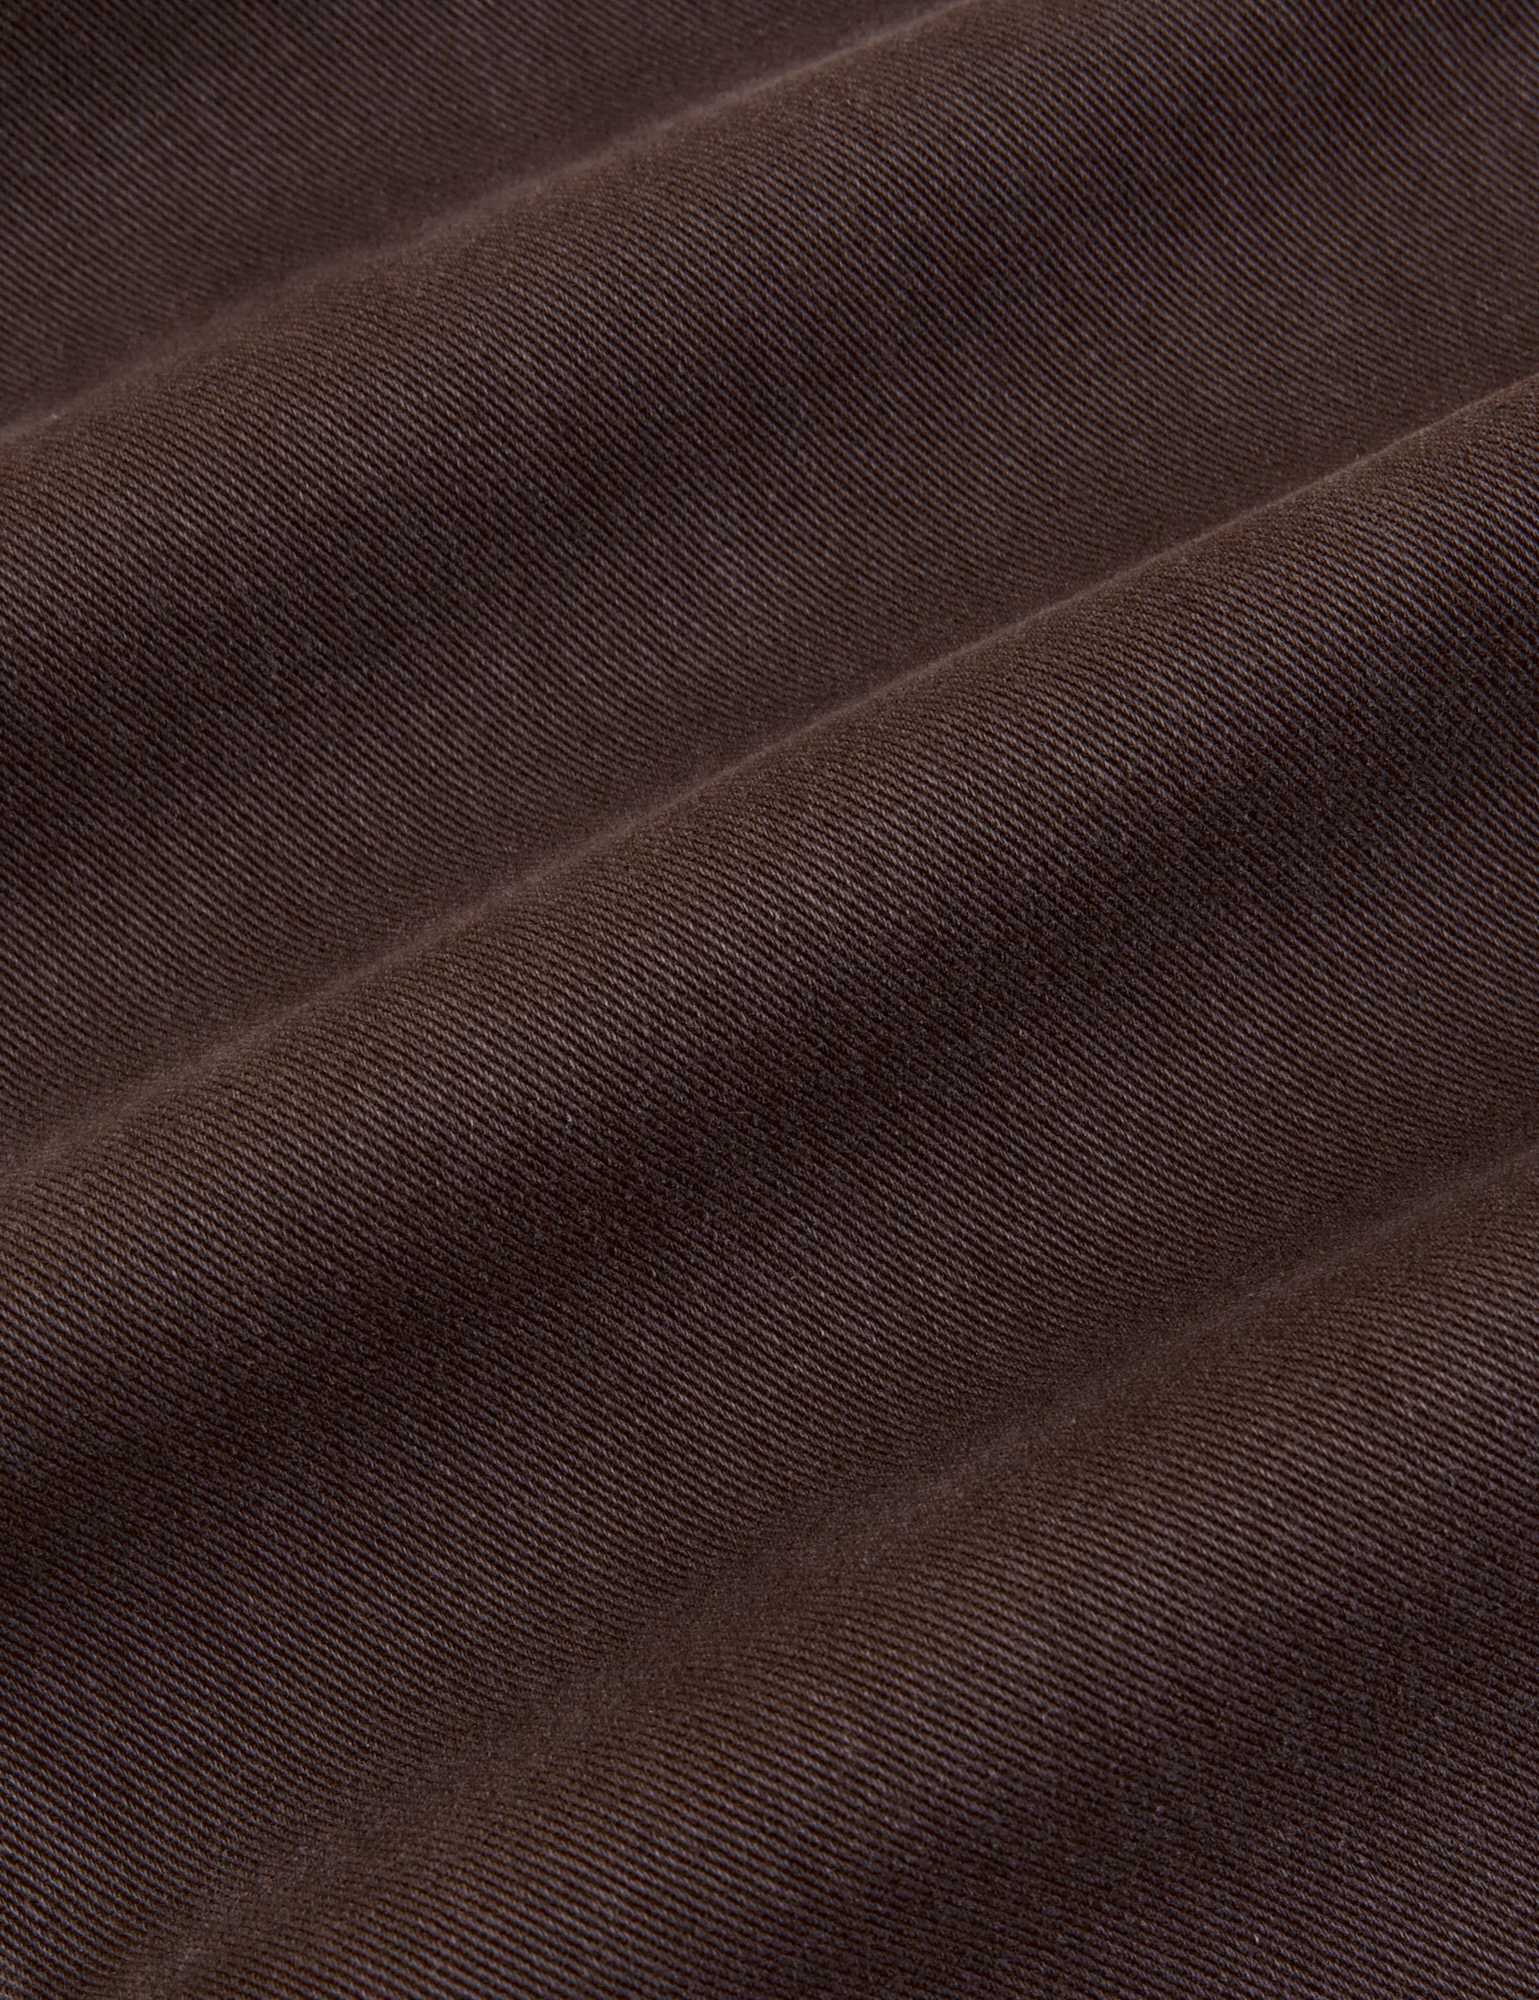 Work Pants in Espresso Brown fabric detail